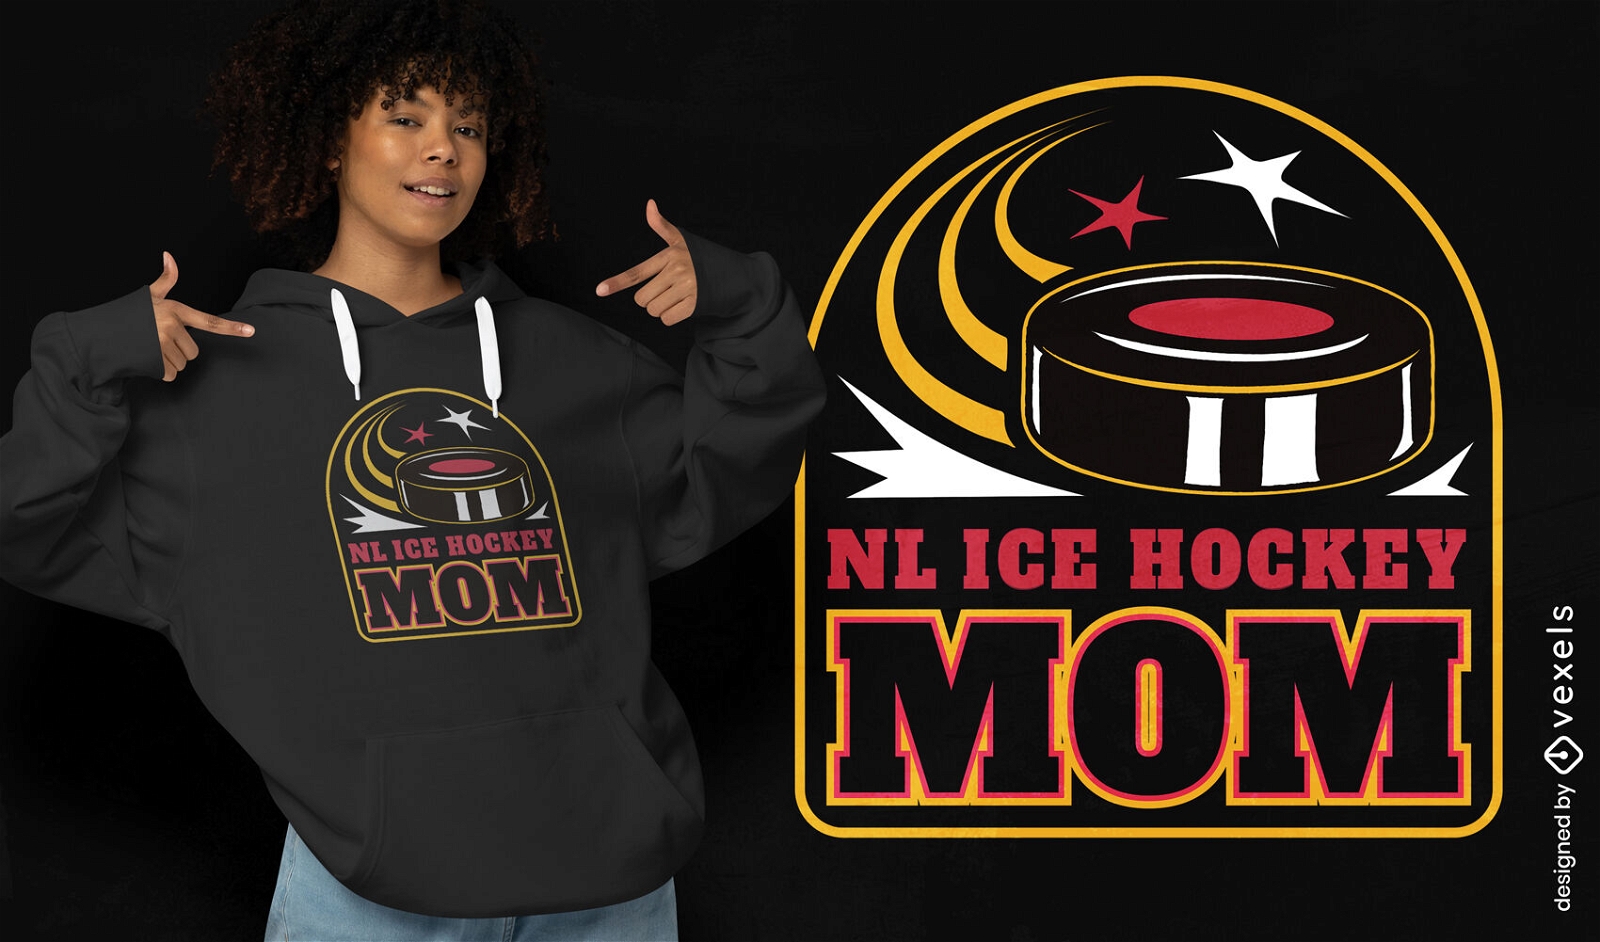 Dise?o de camiseta de mam? de hockey sobre hielo de la nhl.